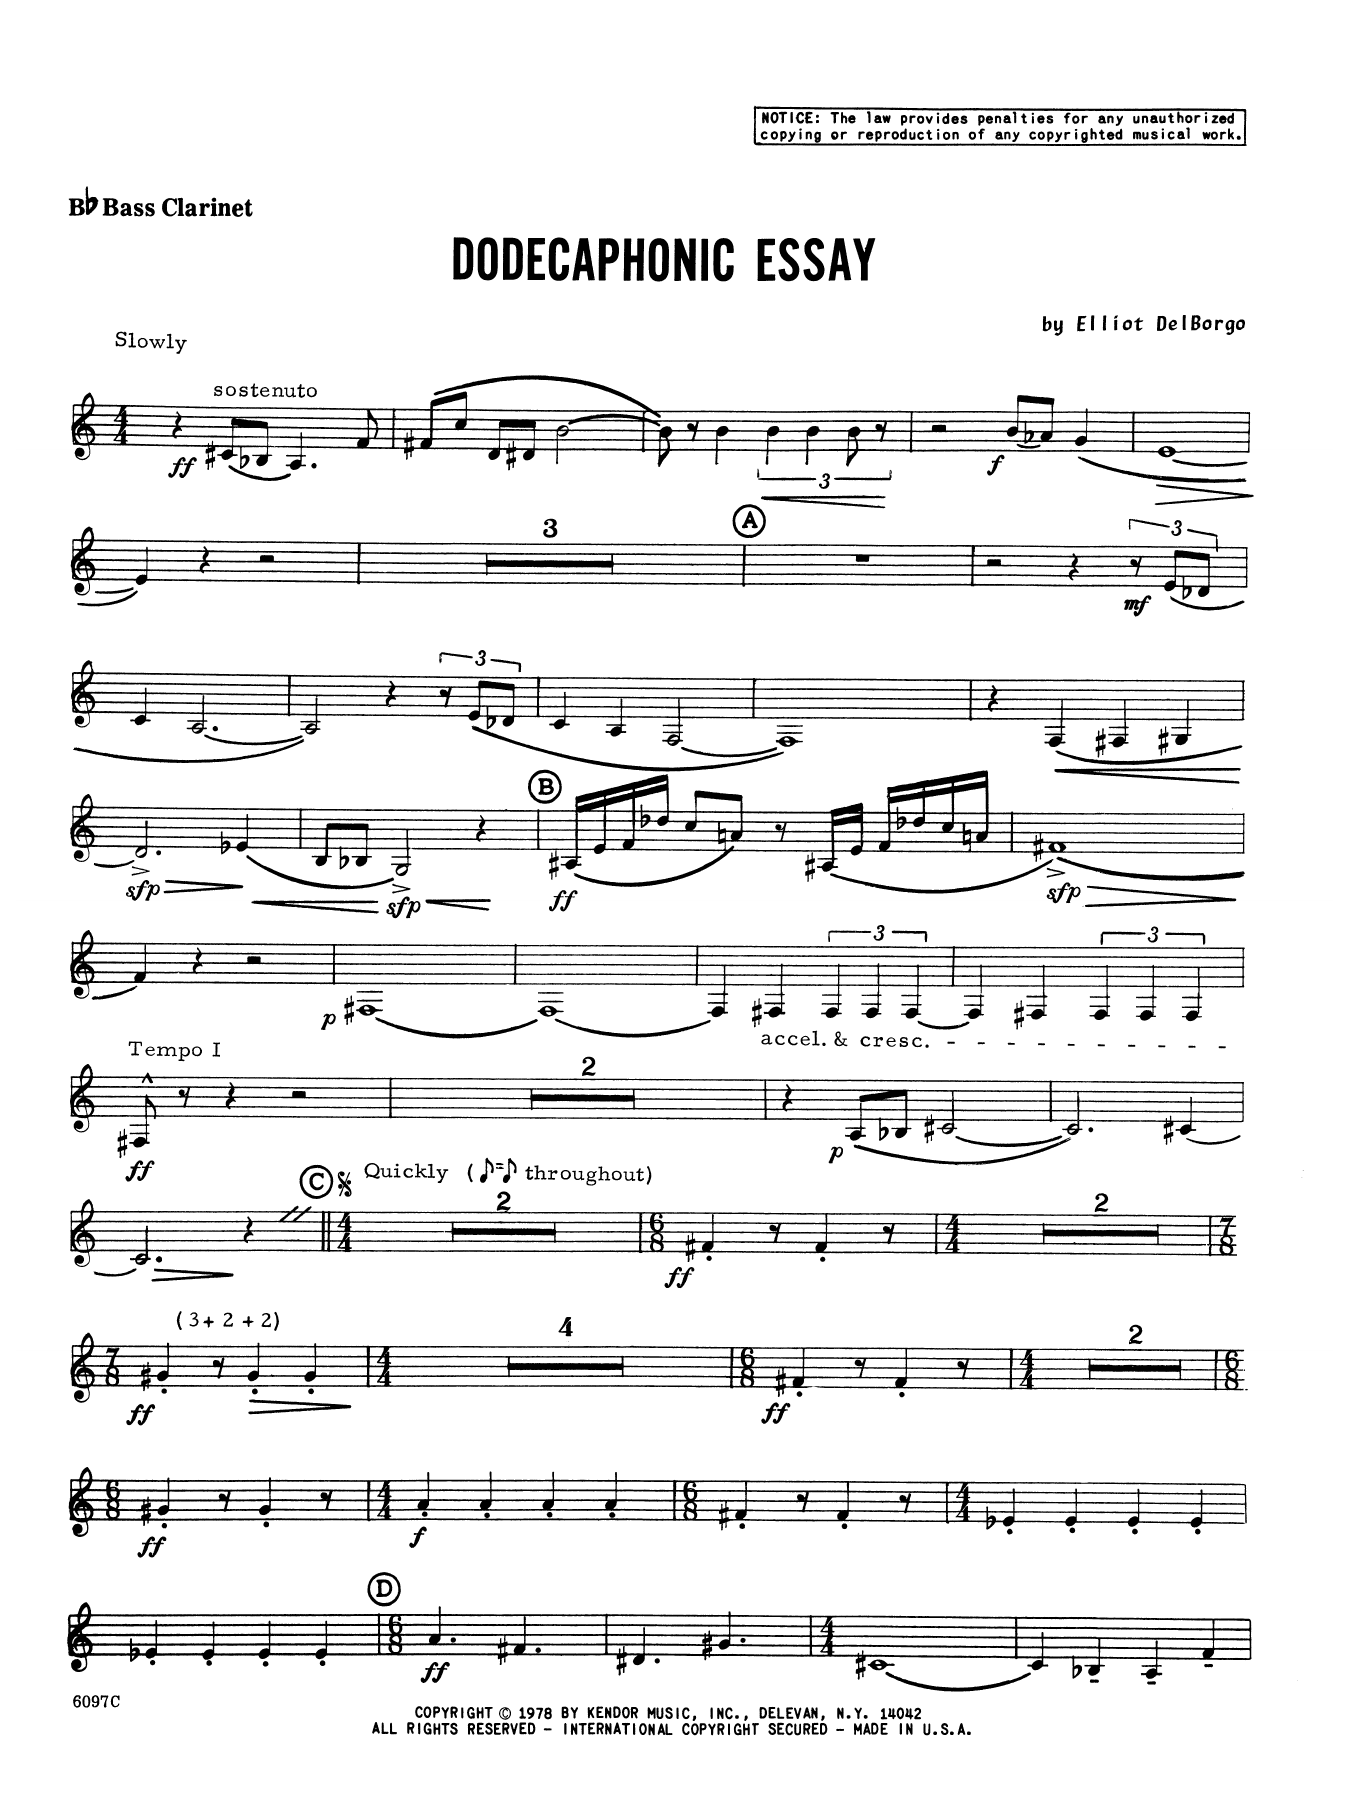 Download Elliot A. Del Borgo Dodecaphonic Essay - Bb Bass Clarinet Sheet Music